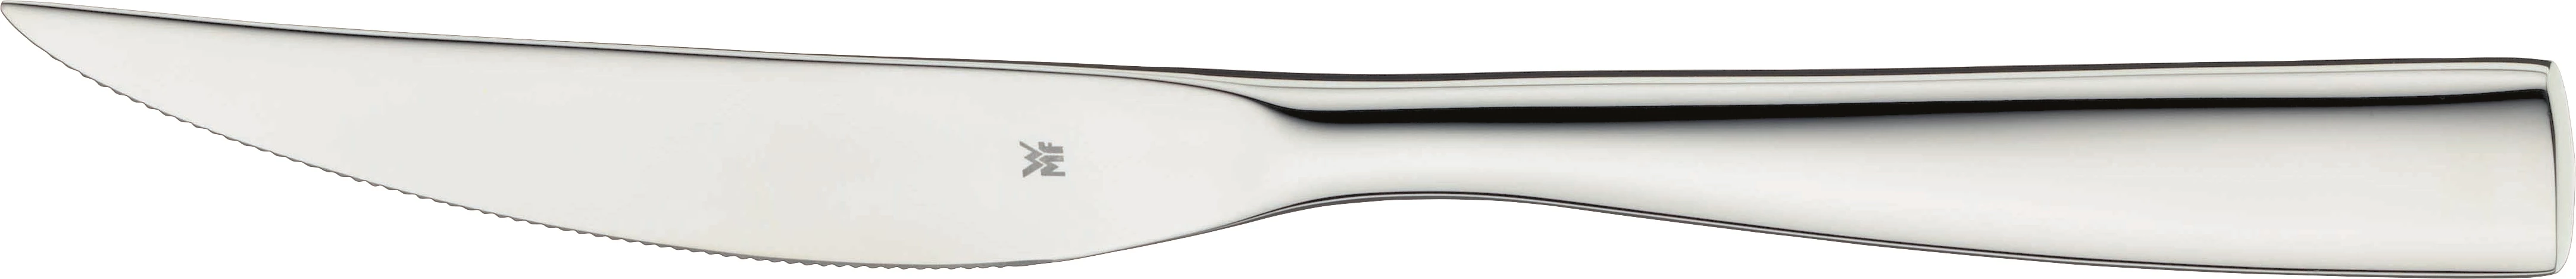 WMF Casino steakkniv, 23,4 cm